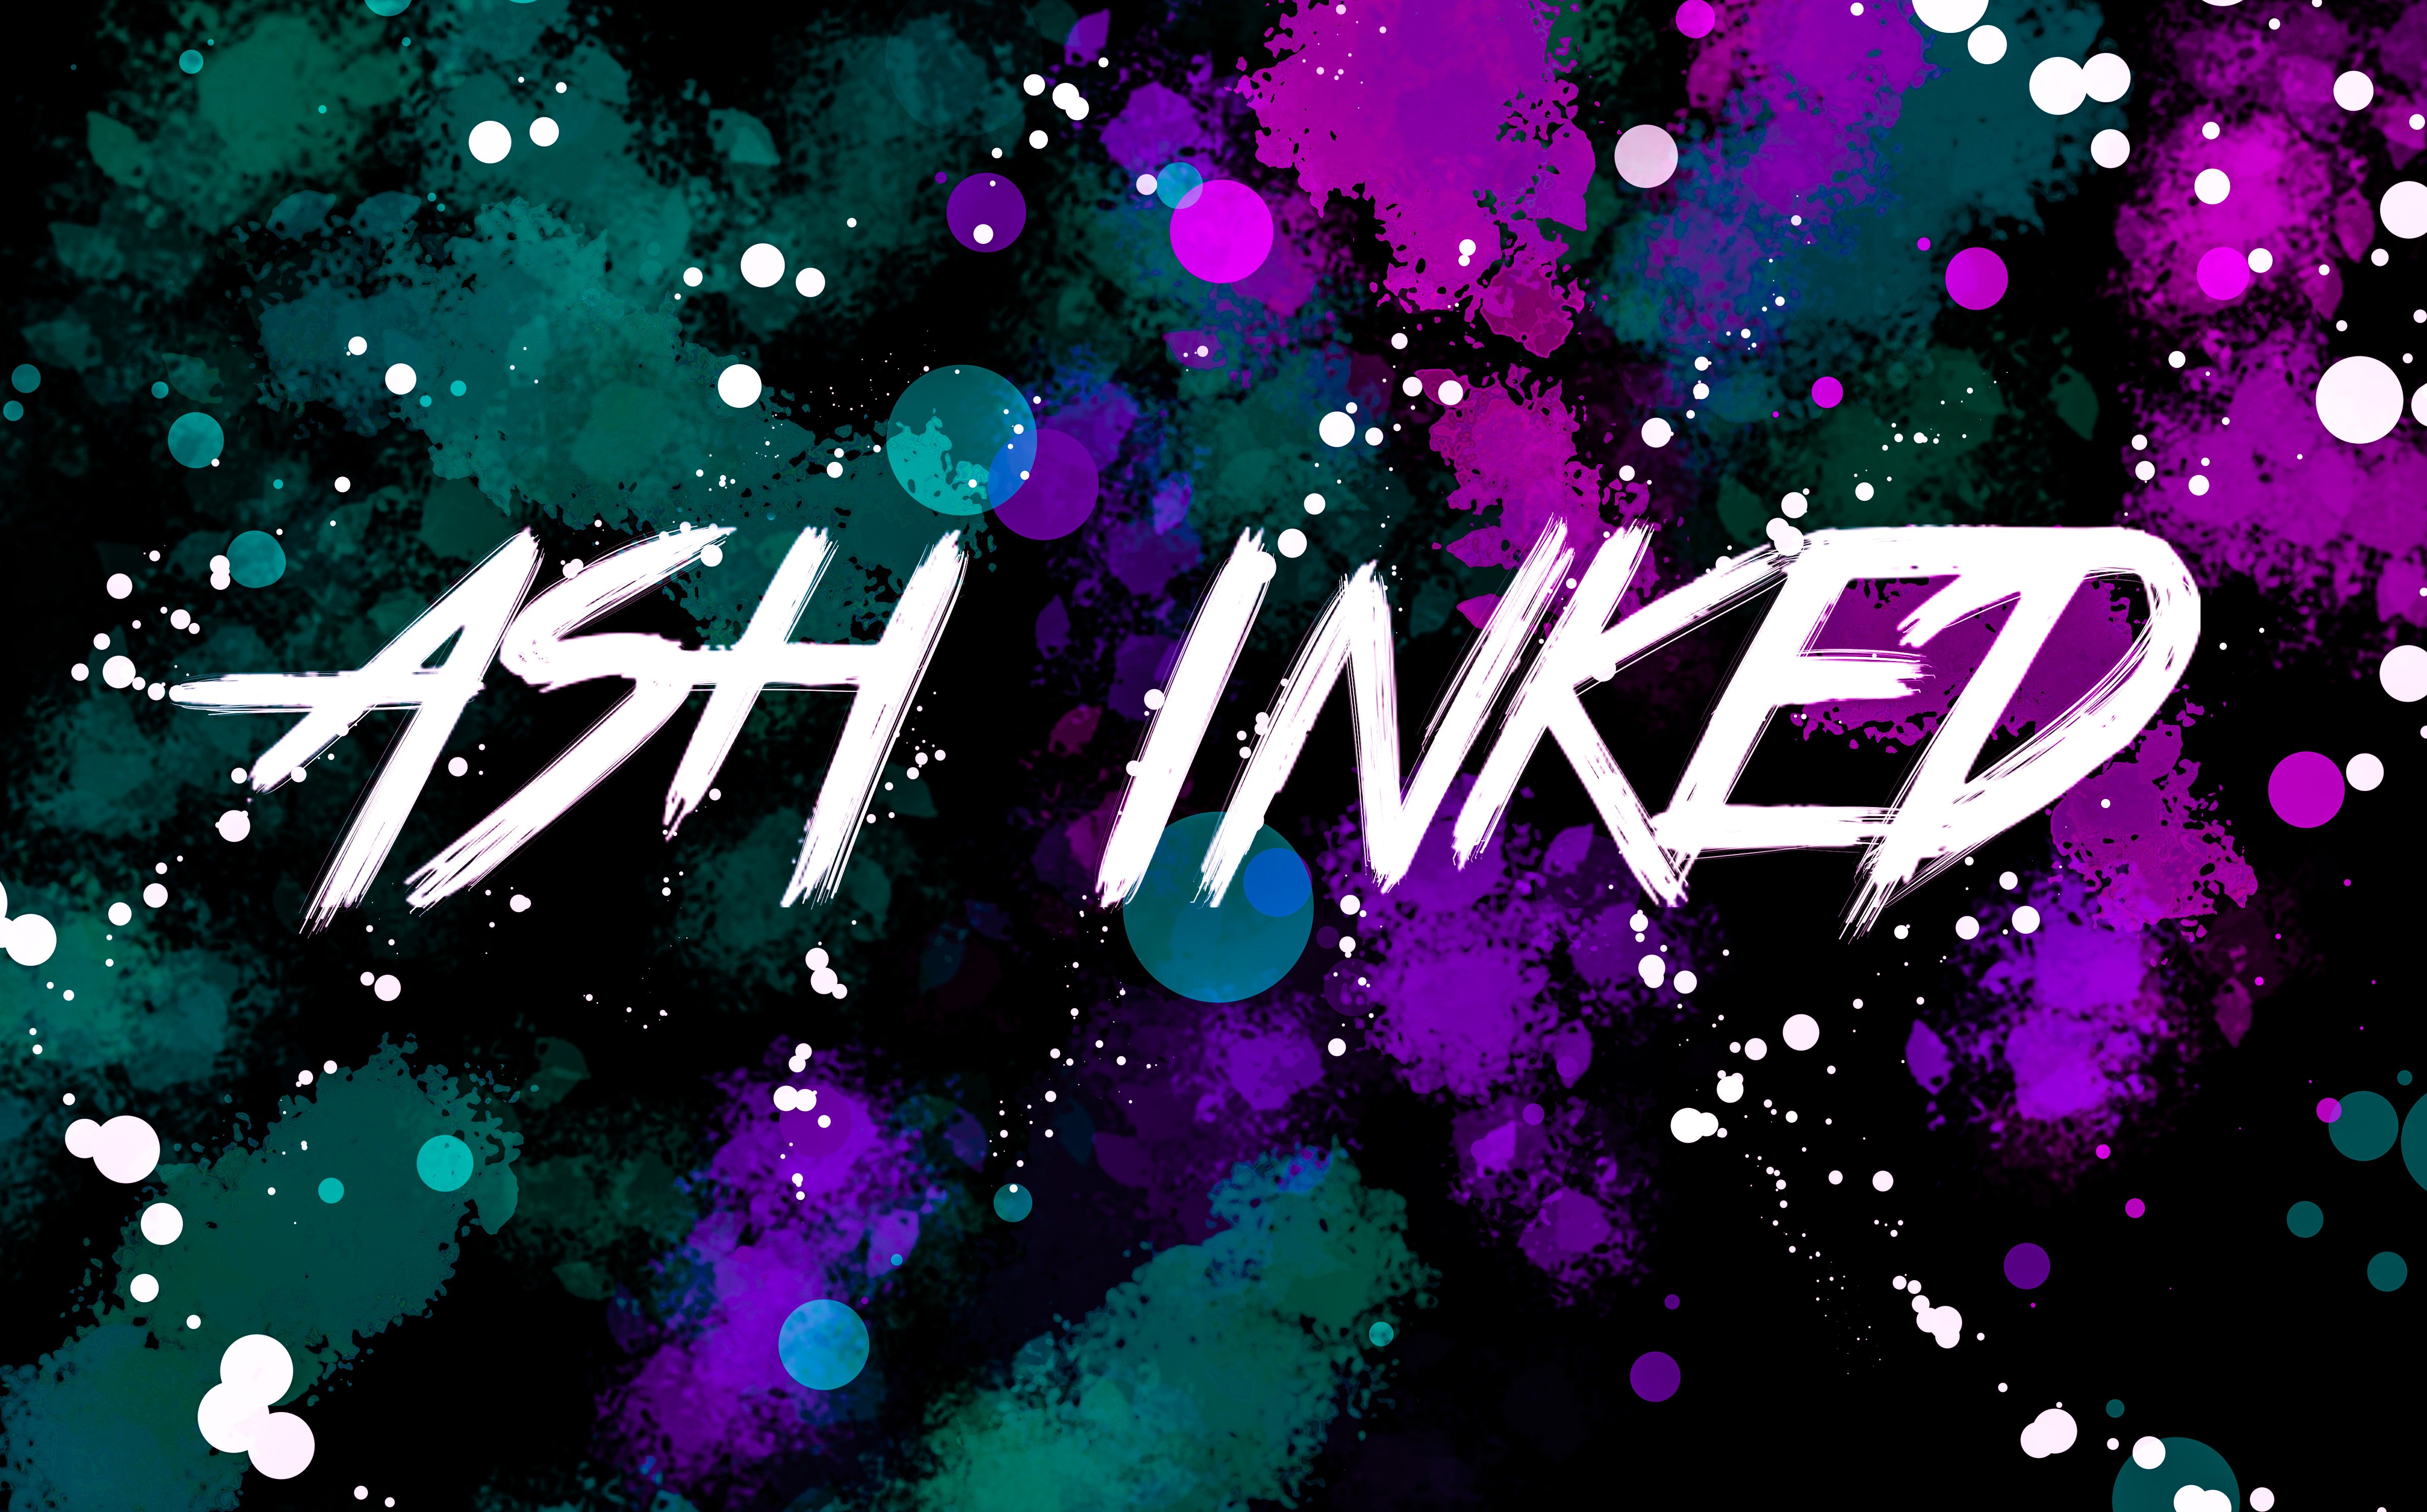 Ash Inked